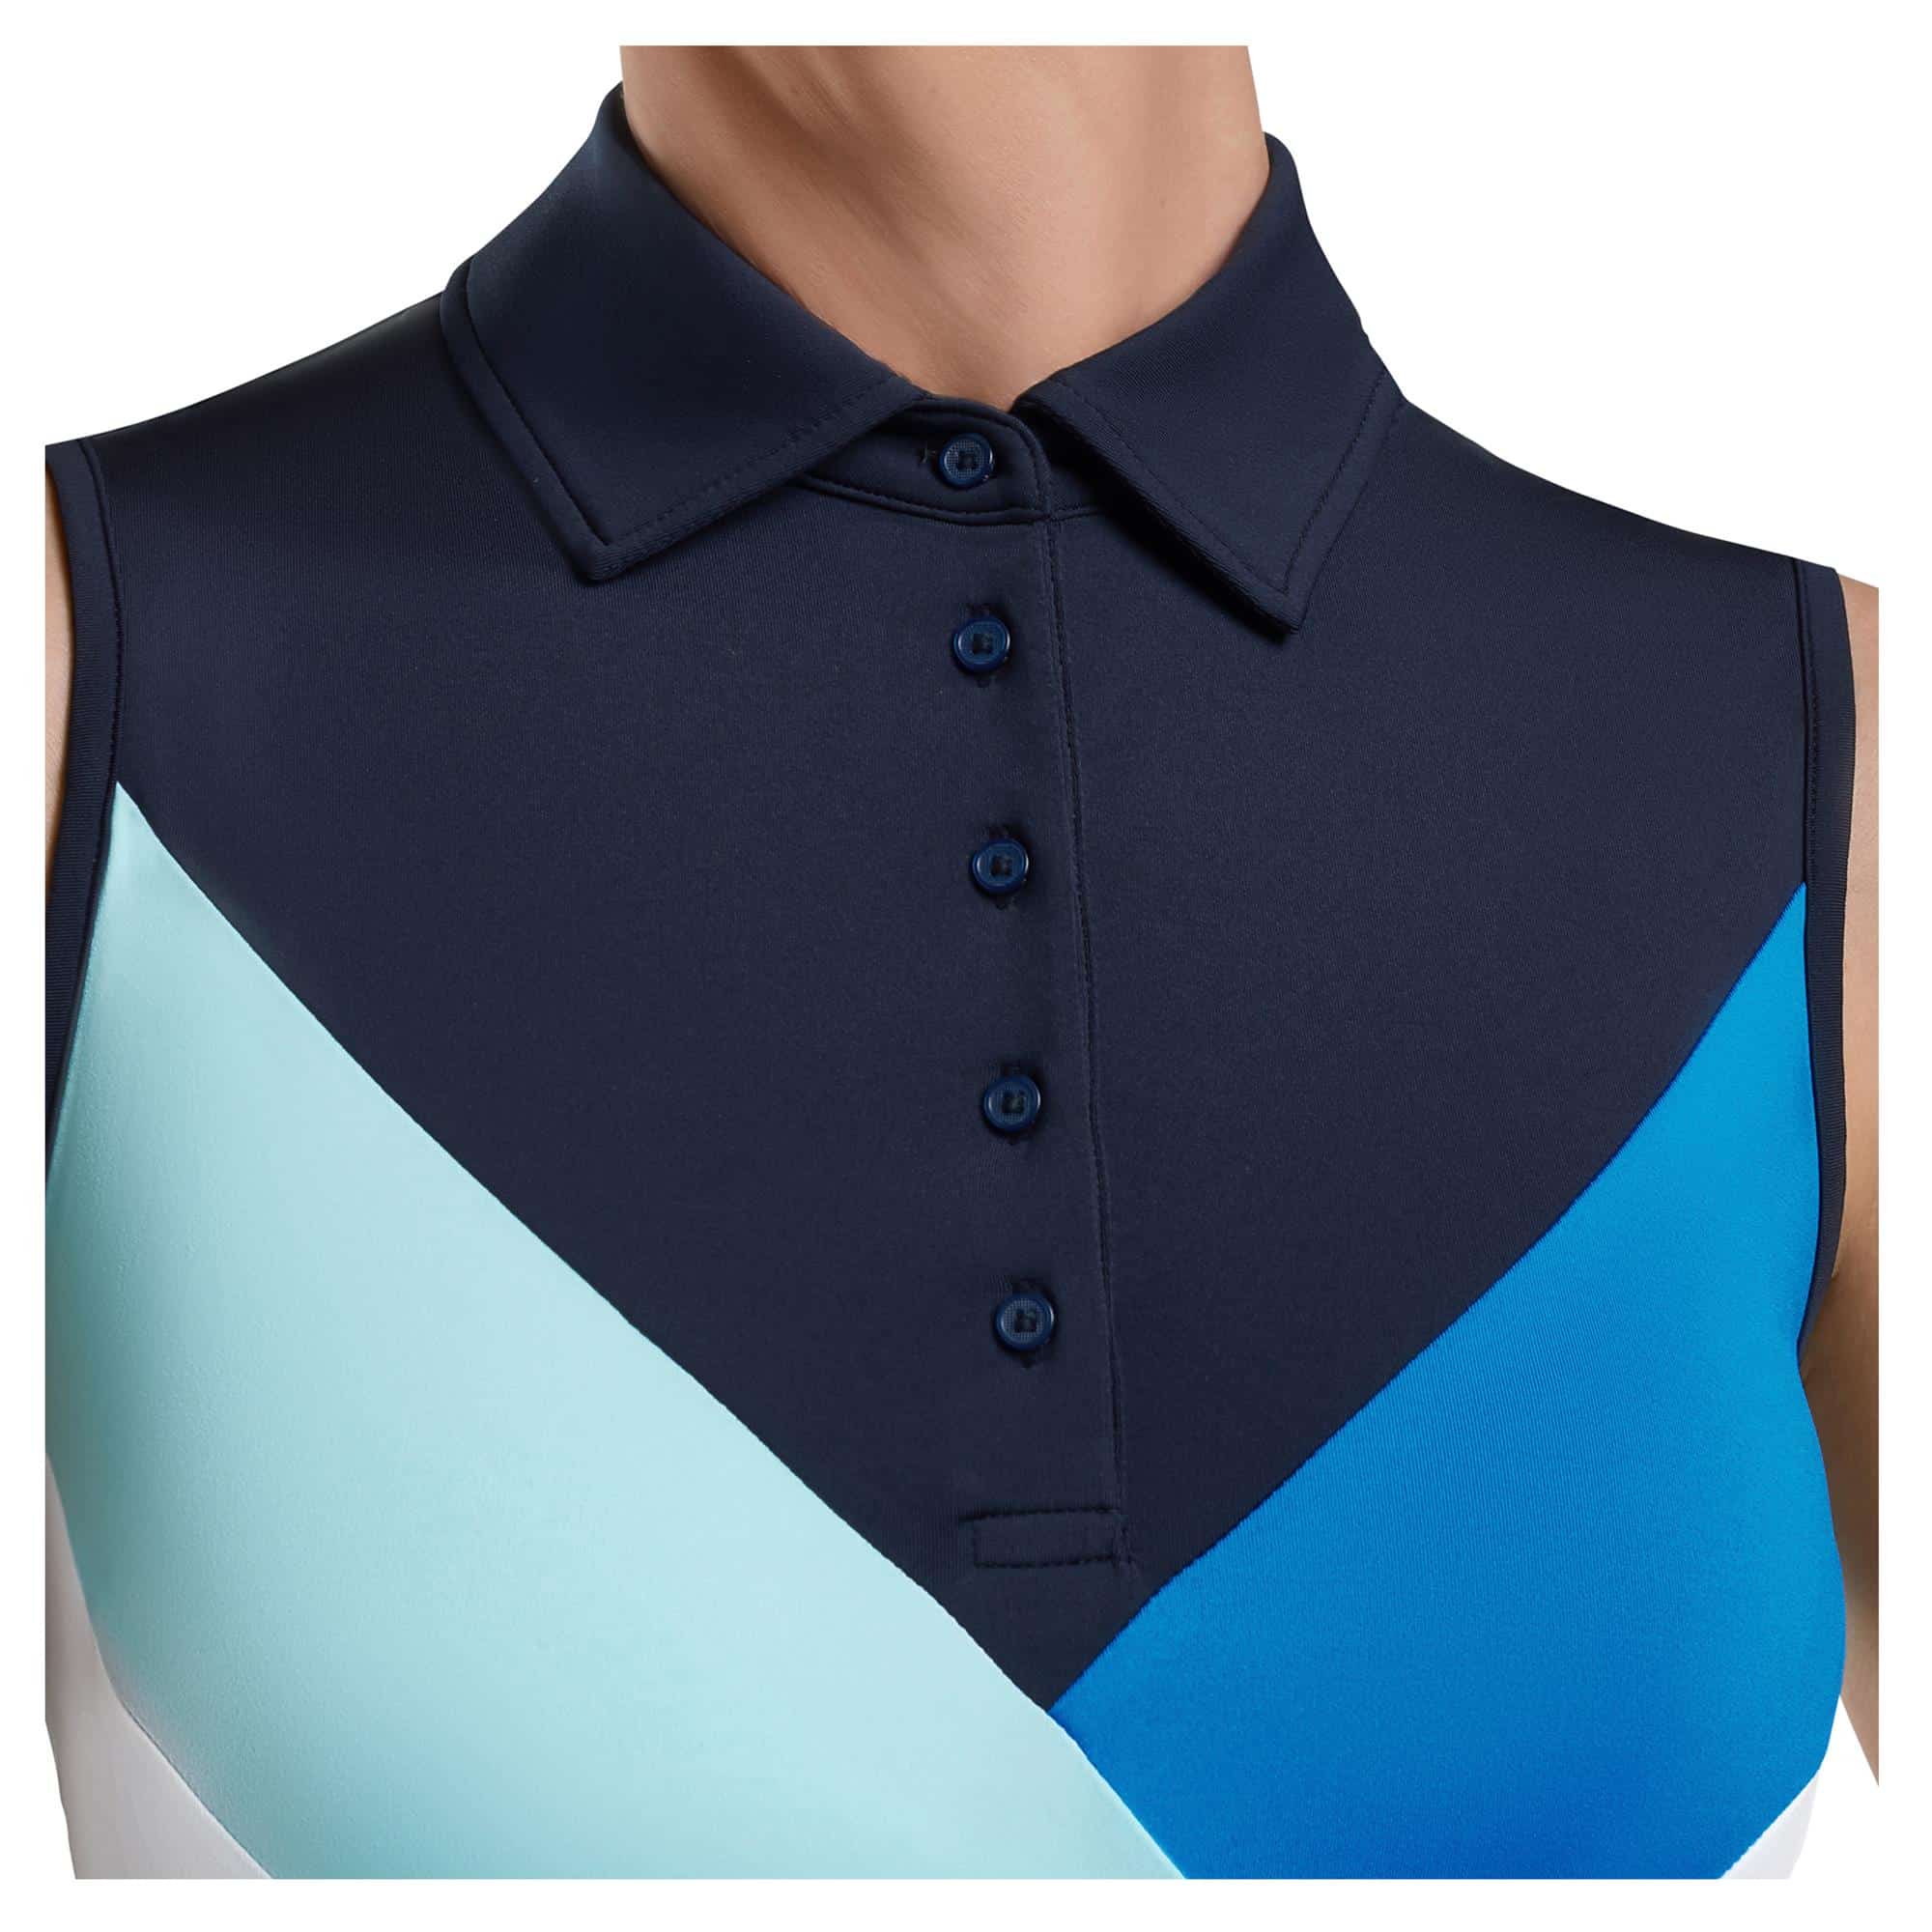 G/FORE Multi V Ladies Sleeveless Golf Polo Shirt Twilight